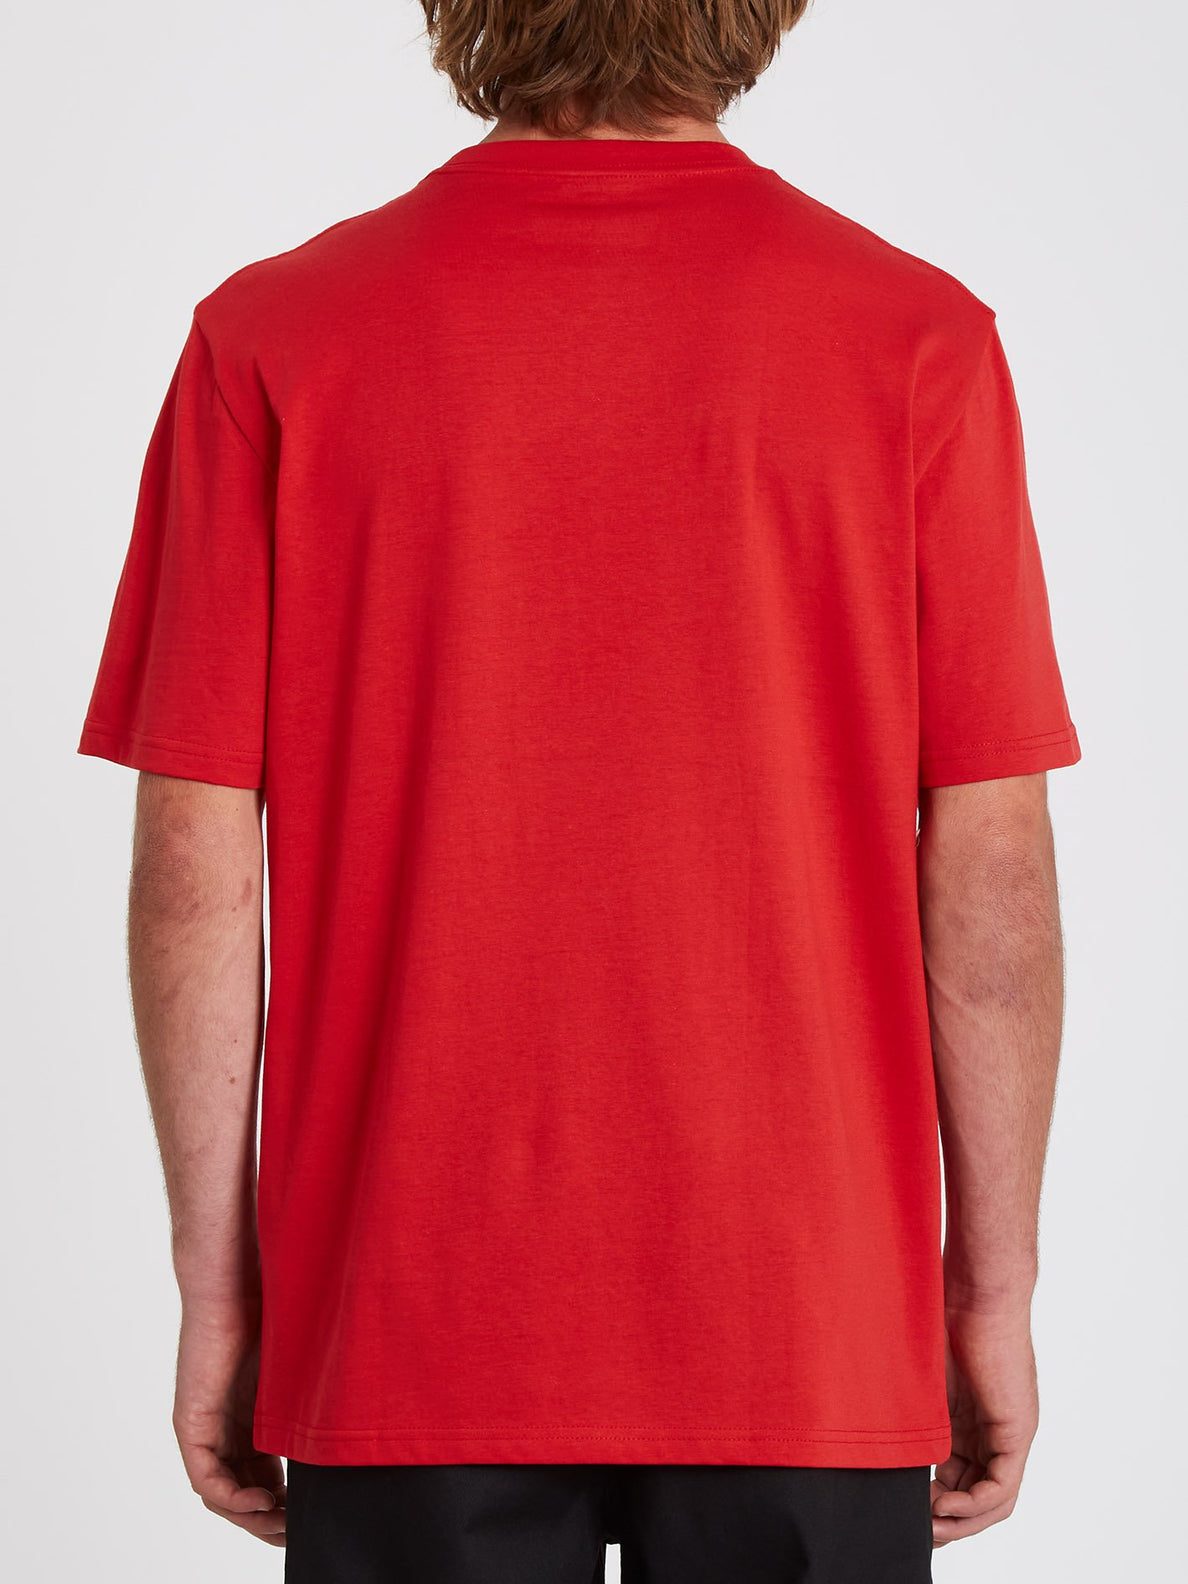 Camiseta Yewltide Cheer - RIBBON RED